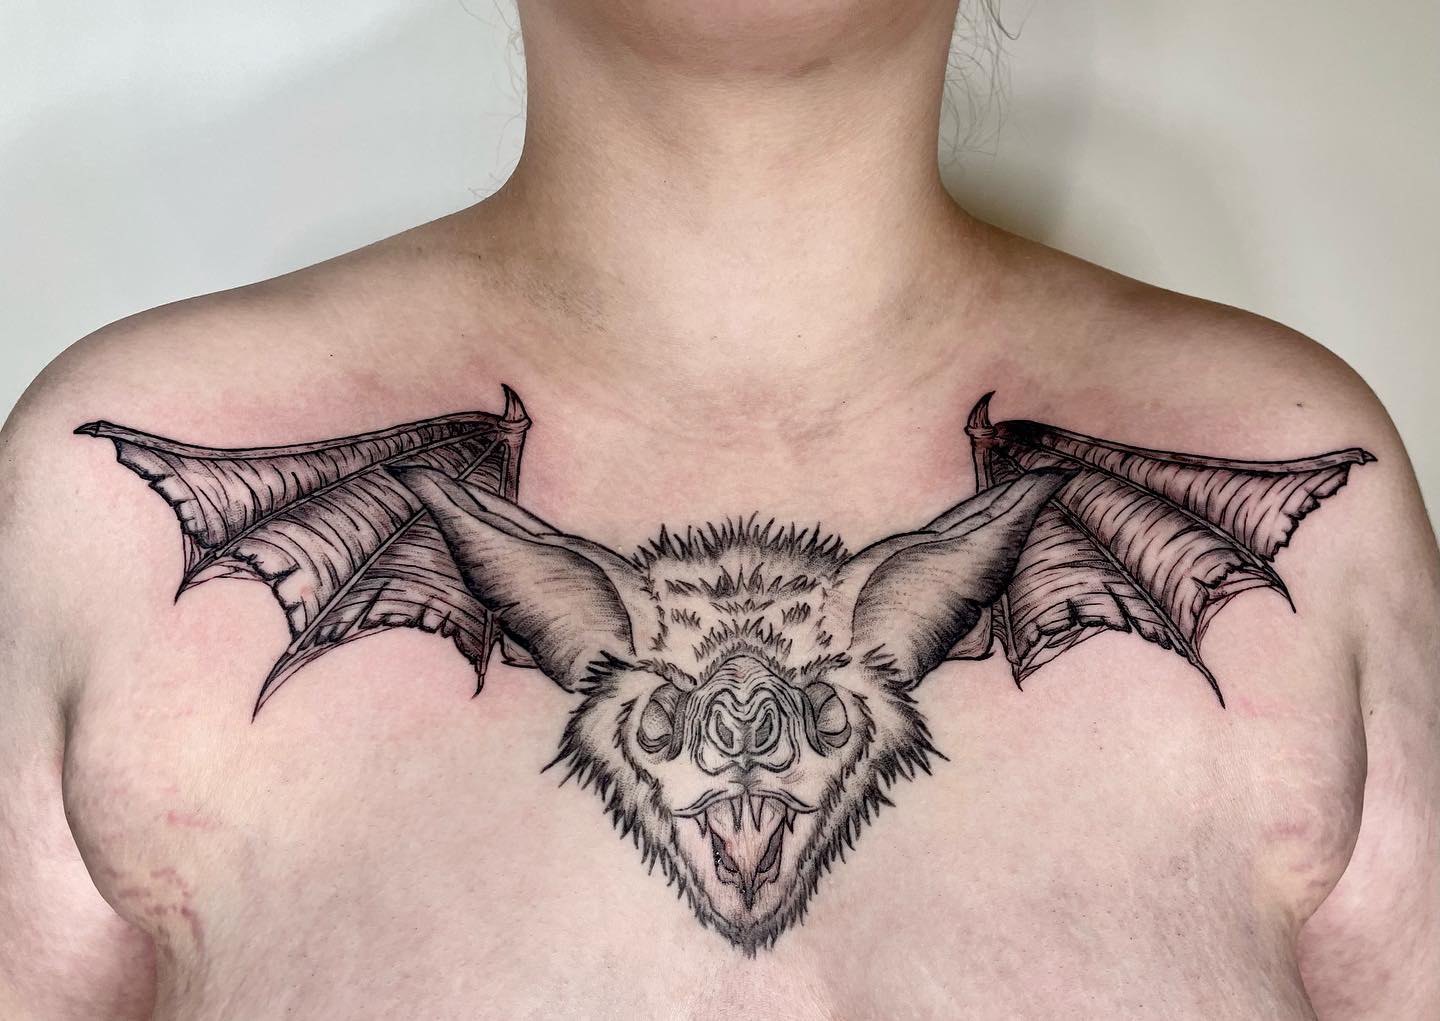 Tatuaje de murciélago en el pecho